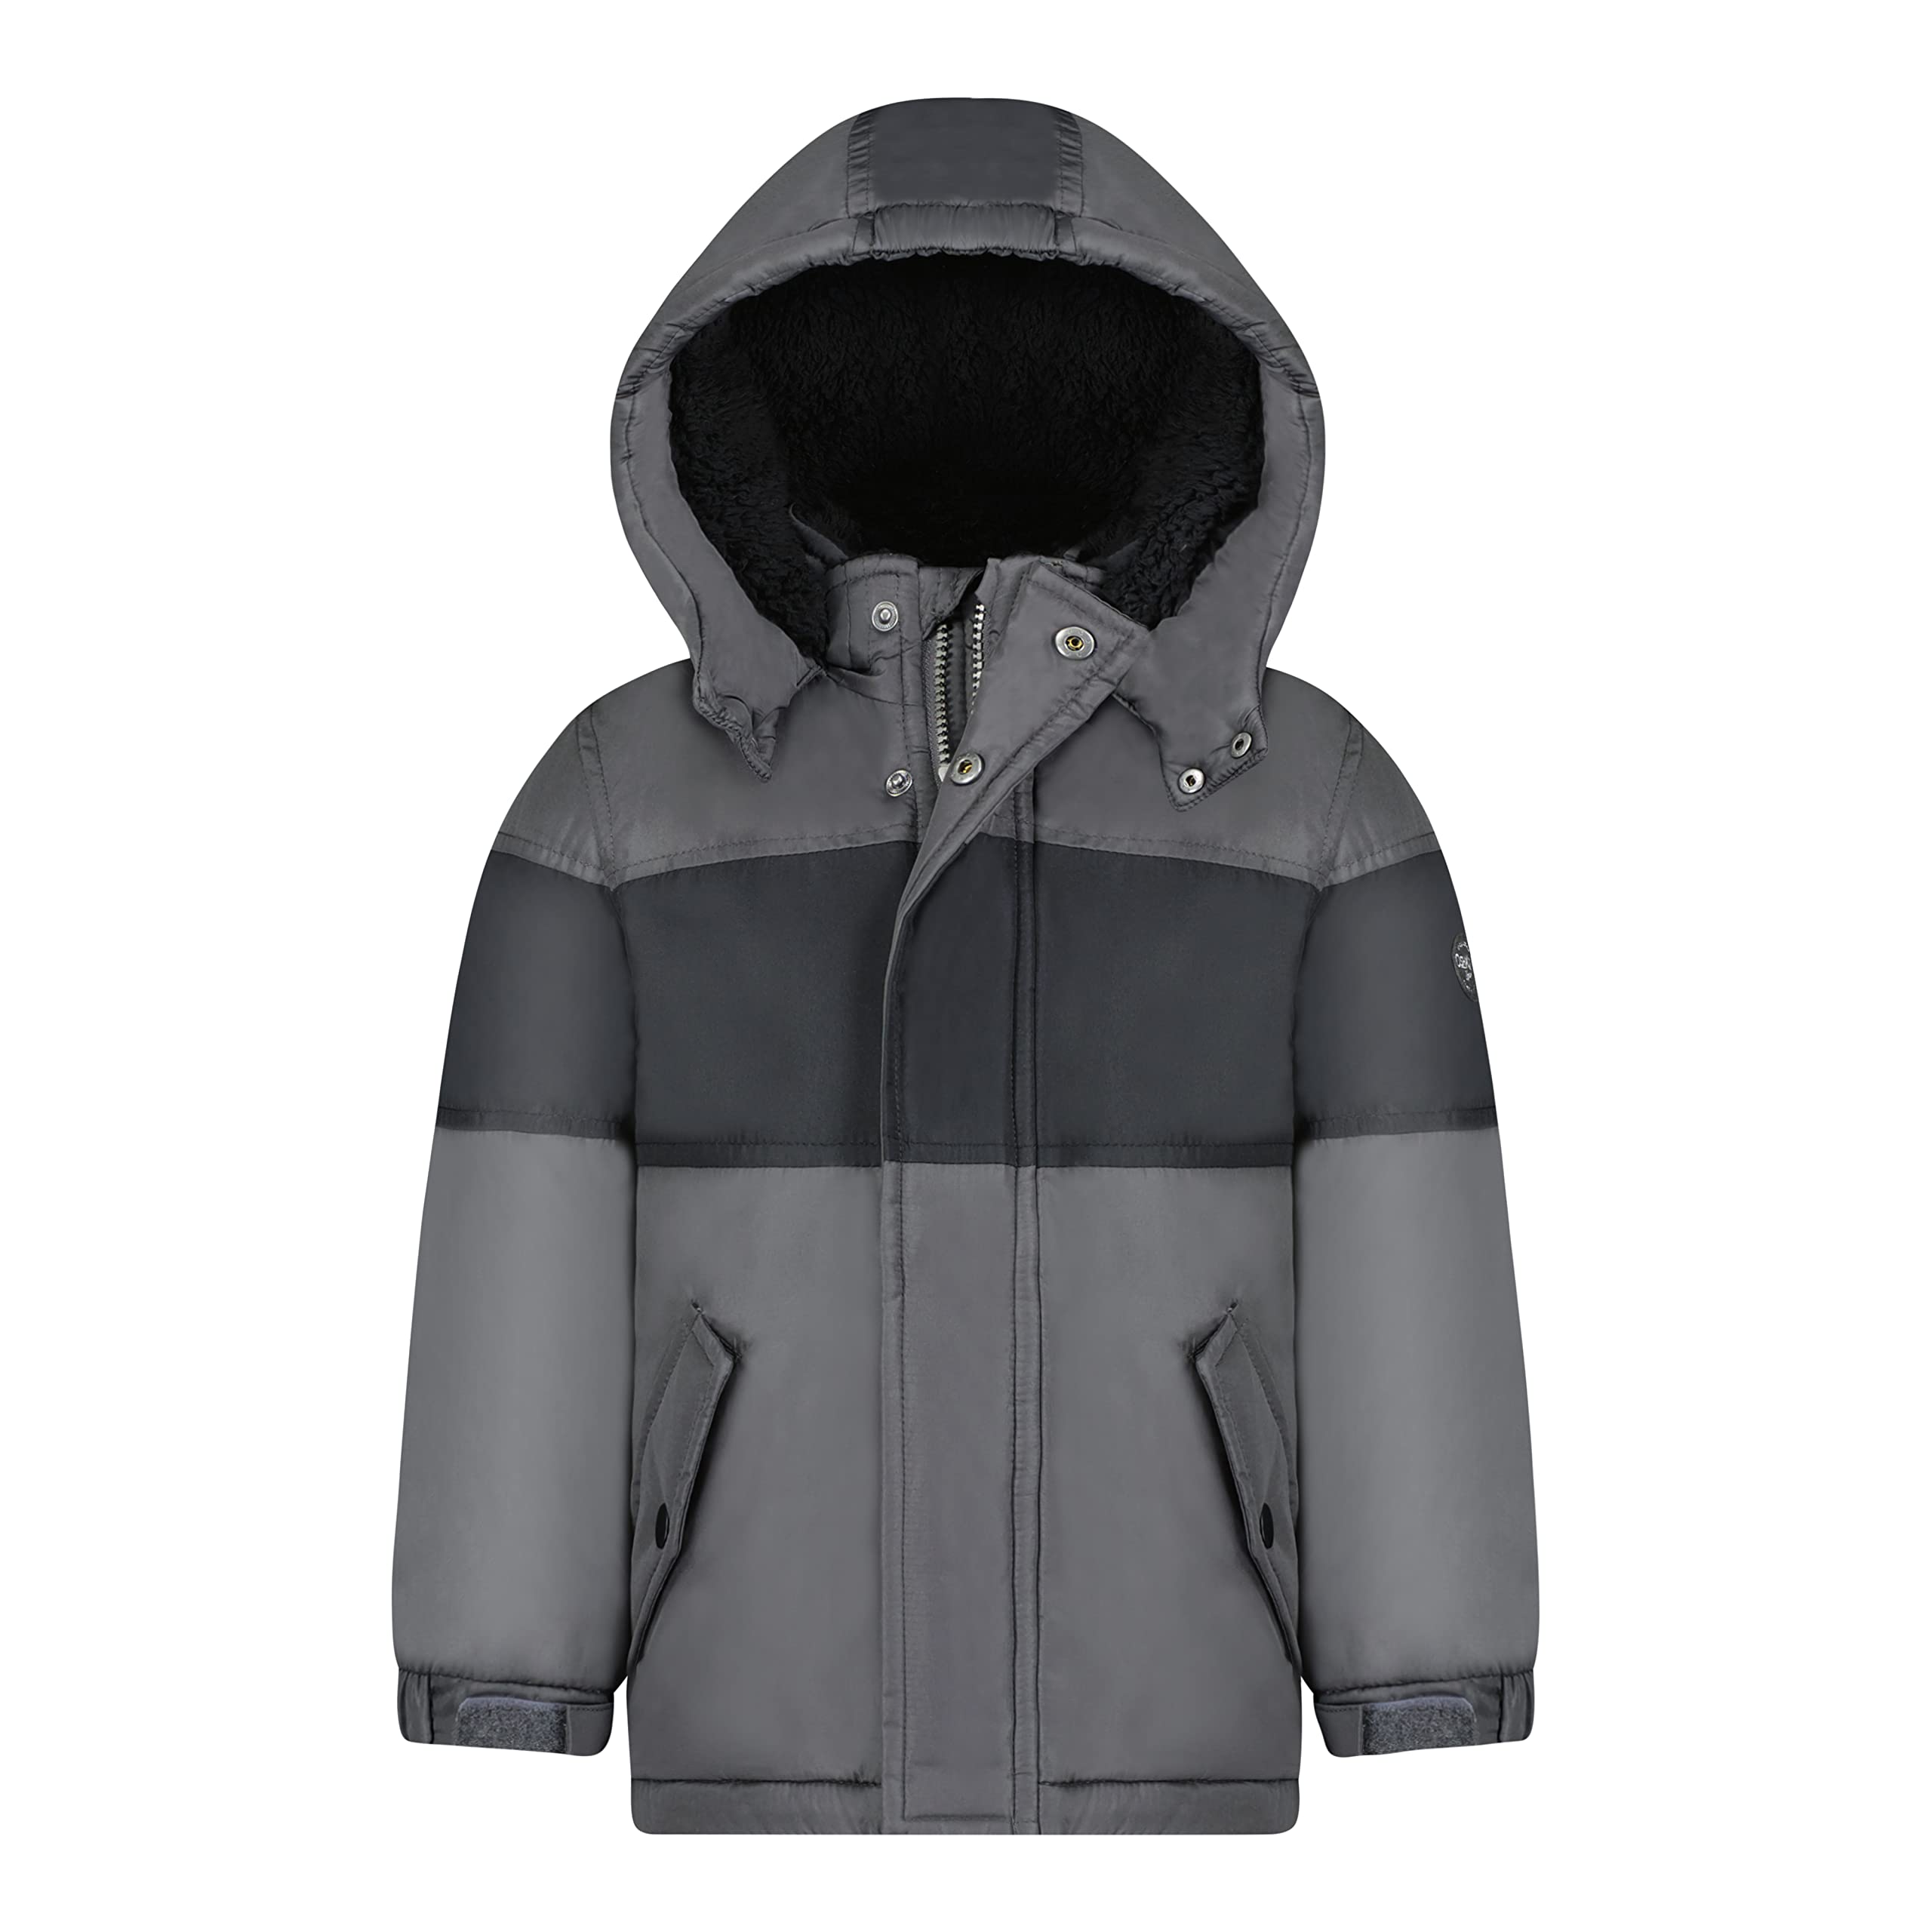 OshKosh B'gosh Baby Boy's Hooded  Winter Coat (Blue, 2 Years) $13.44 & More + Free Shipping w/ Prime or on $25+